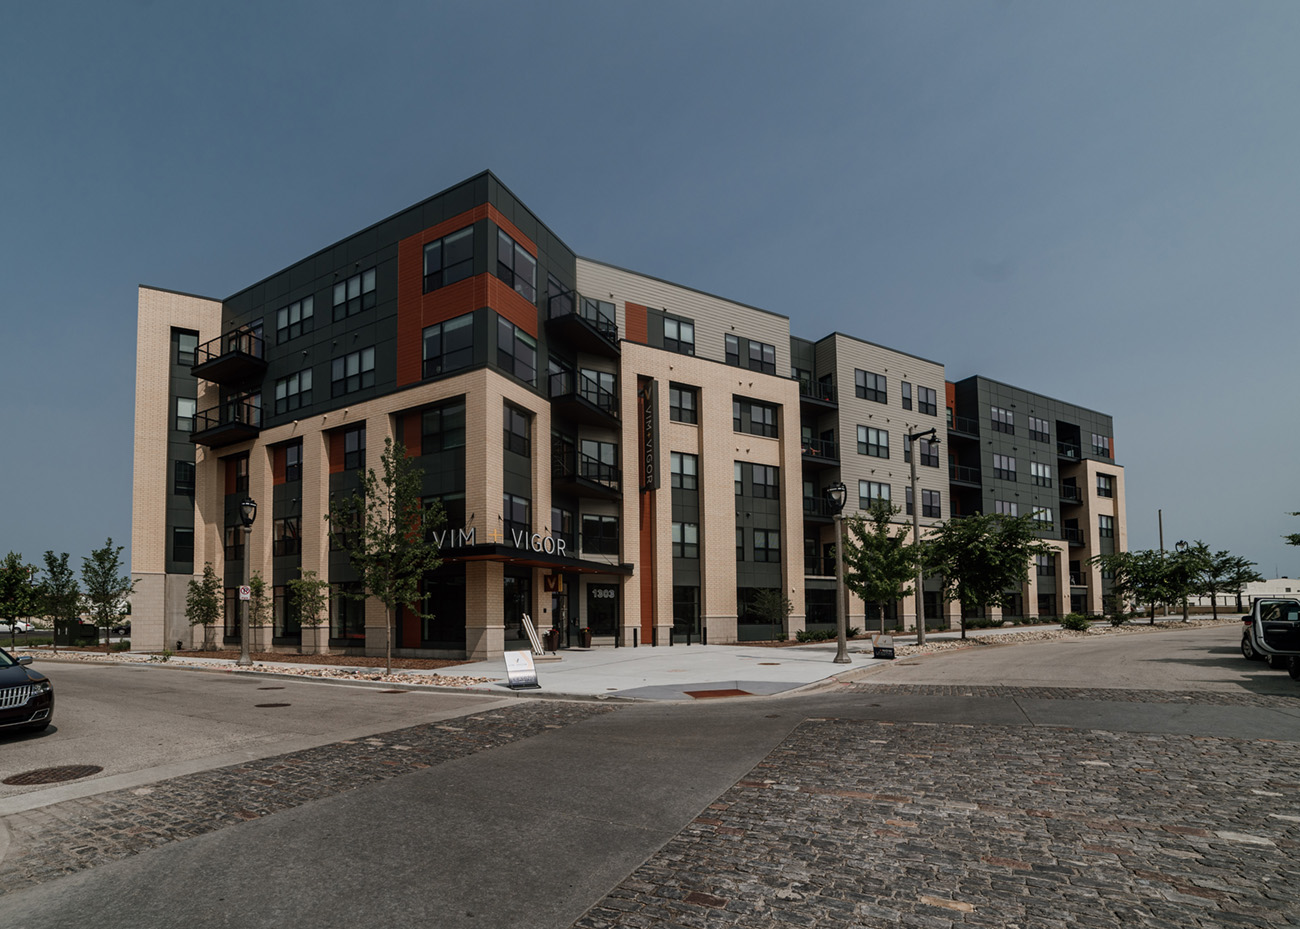 Exterior | VIm & Vigor | Milwaukee, Wis. | JLA Architects